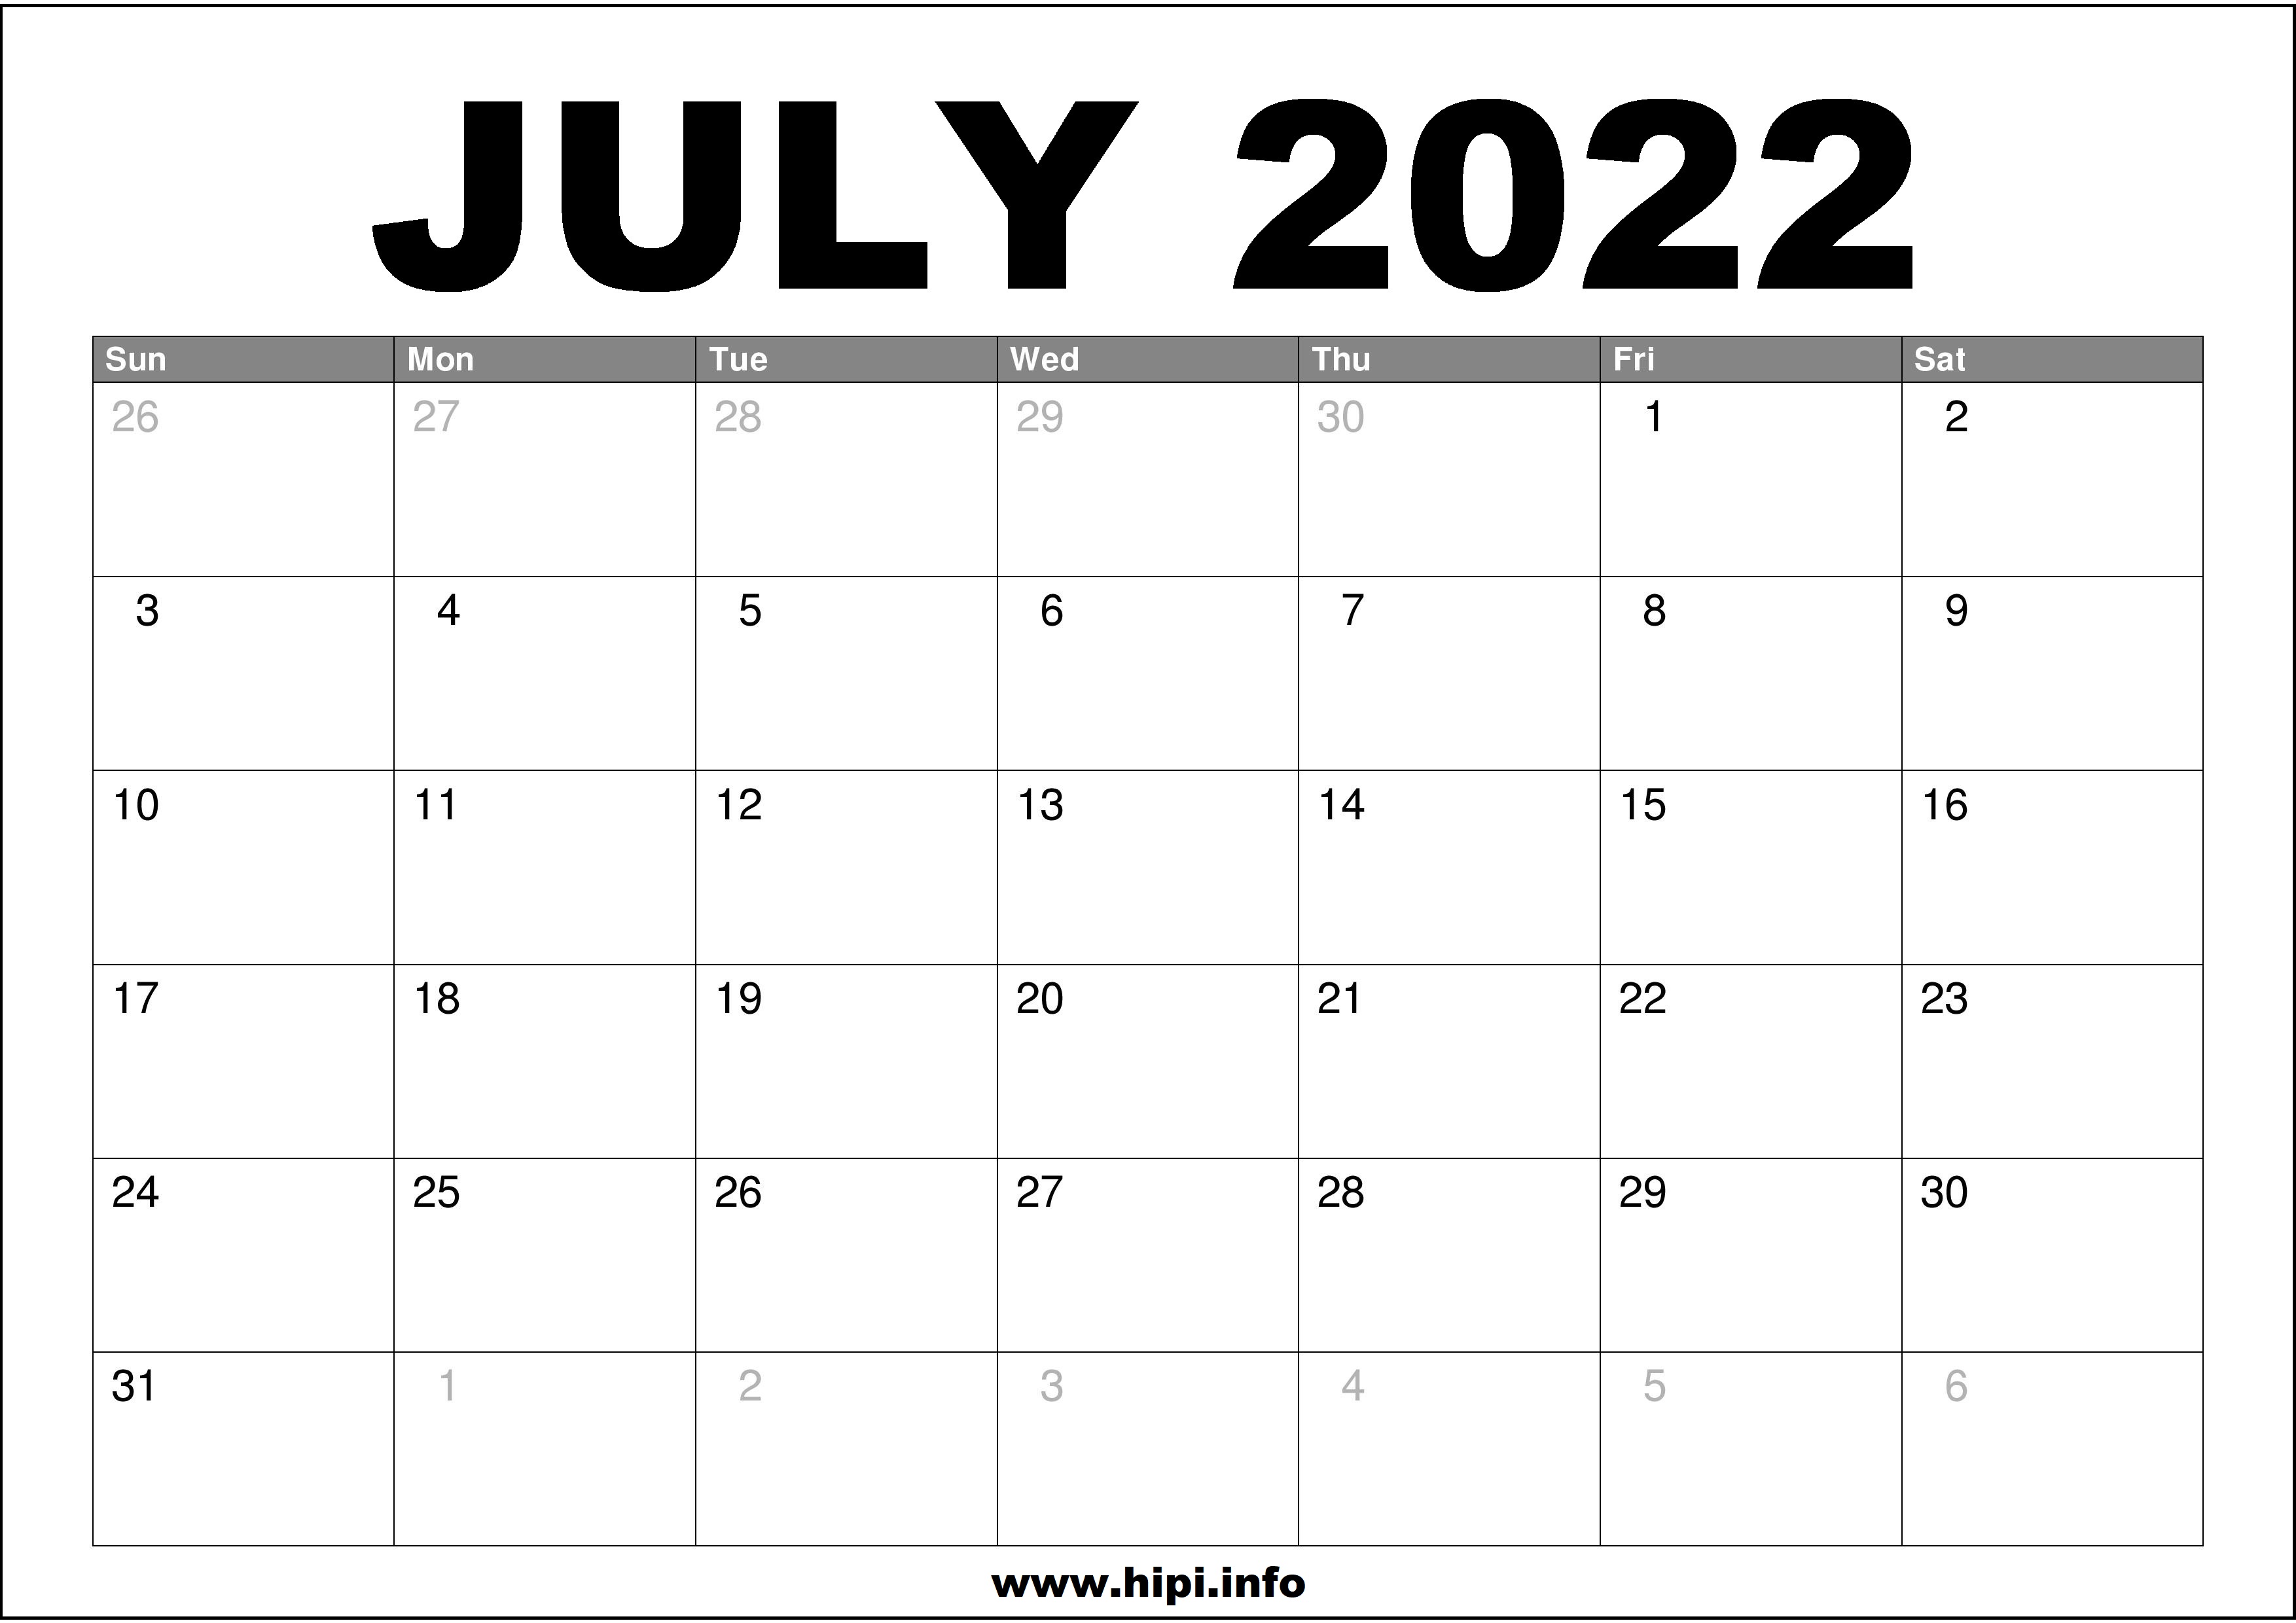 Month Of July Calendar 2022 July 2022 Calendar Printable Free - Hipi.info | Calendars Printable Free